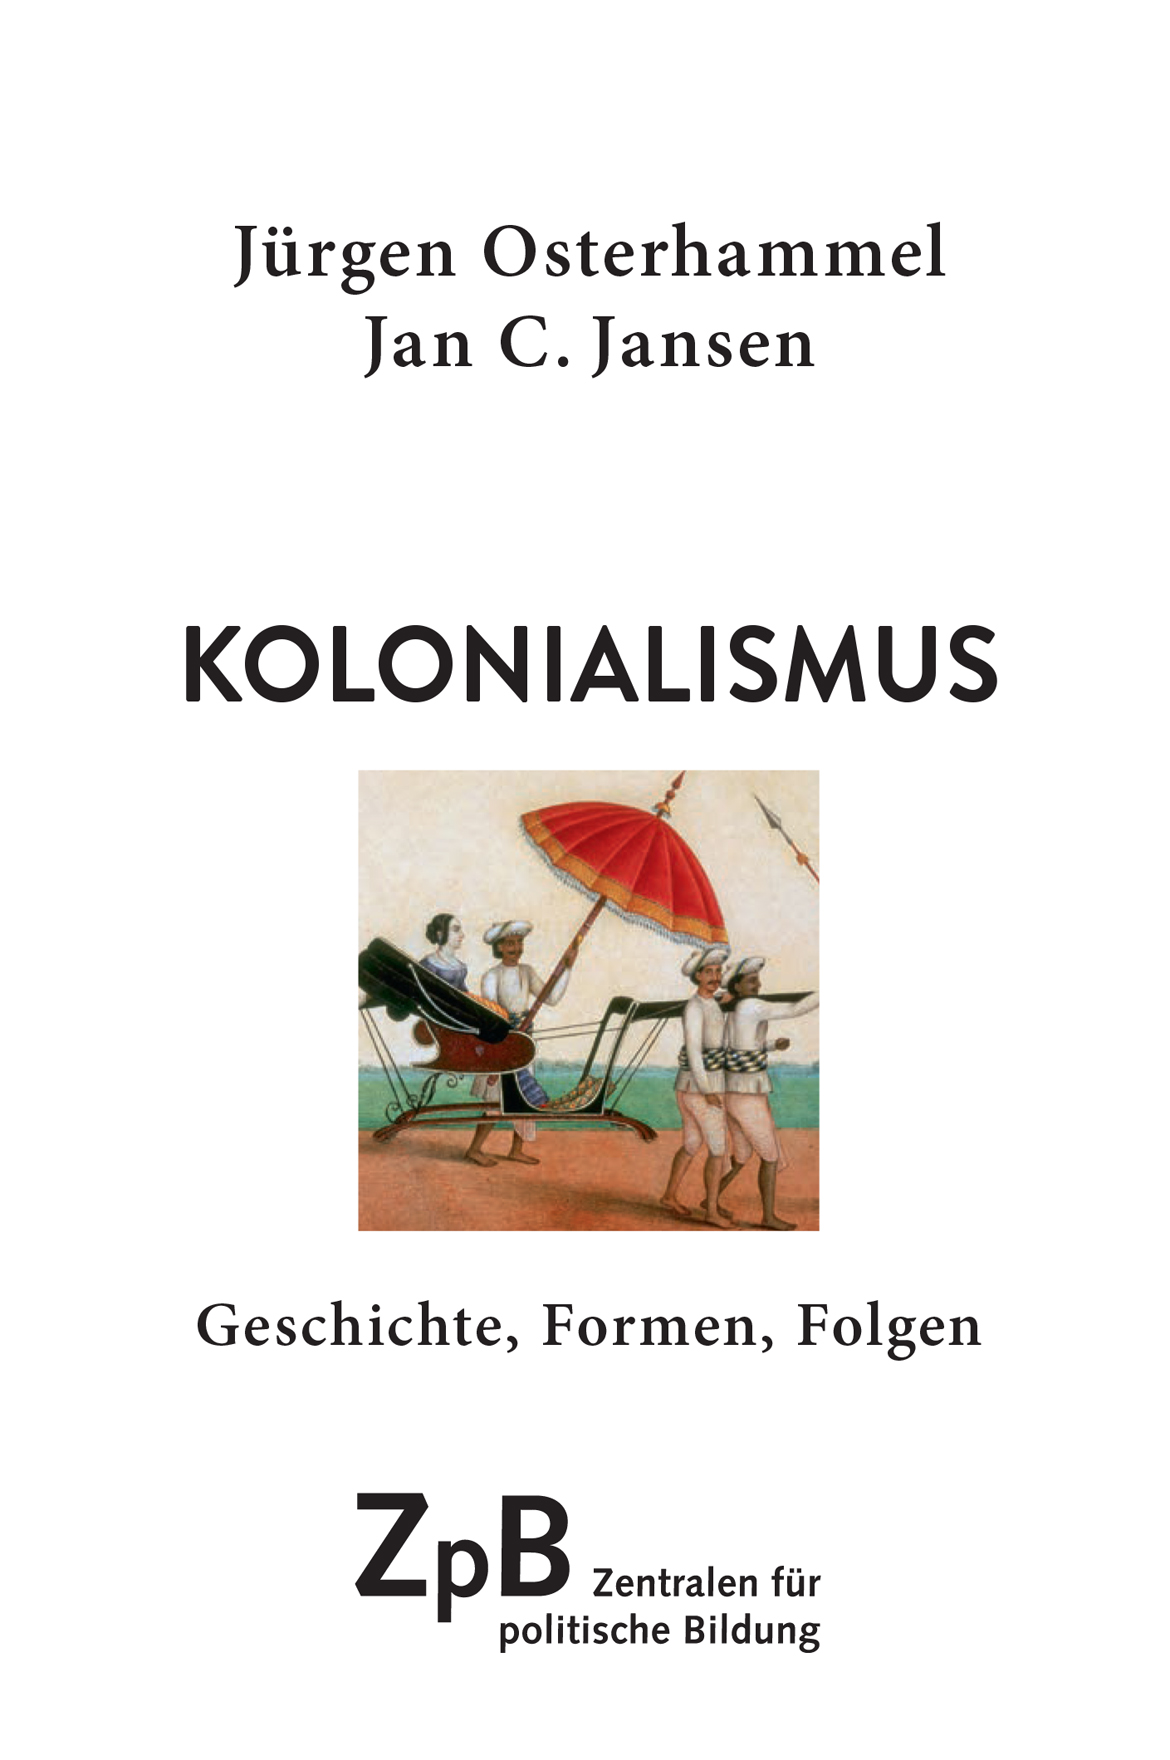 Buchcover: Kolonialismus